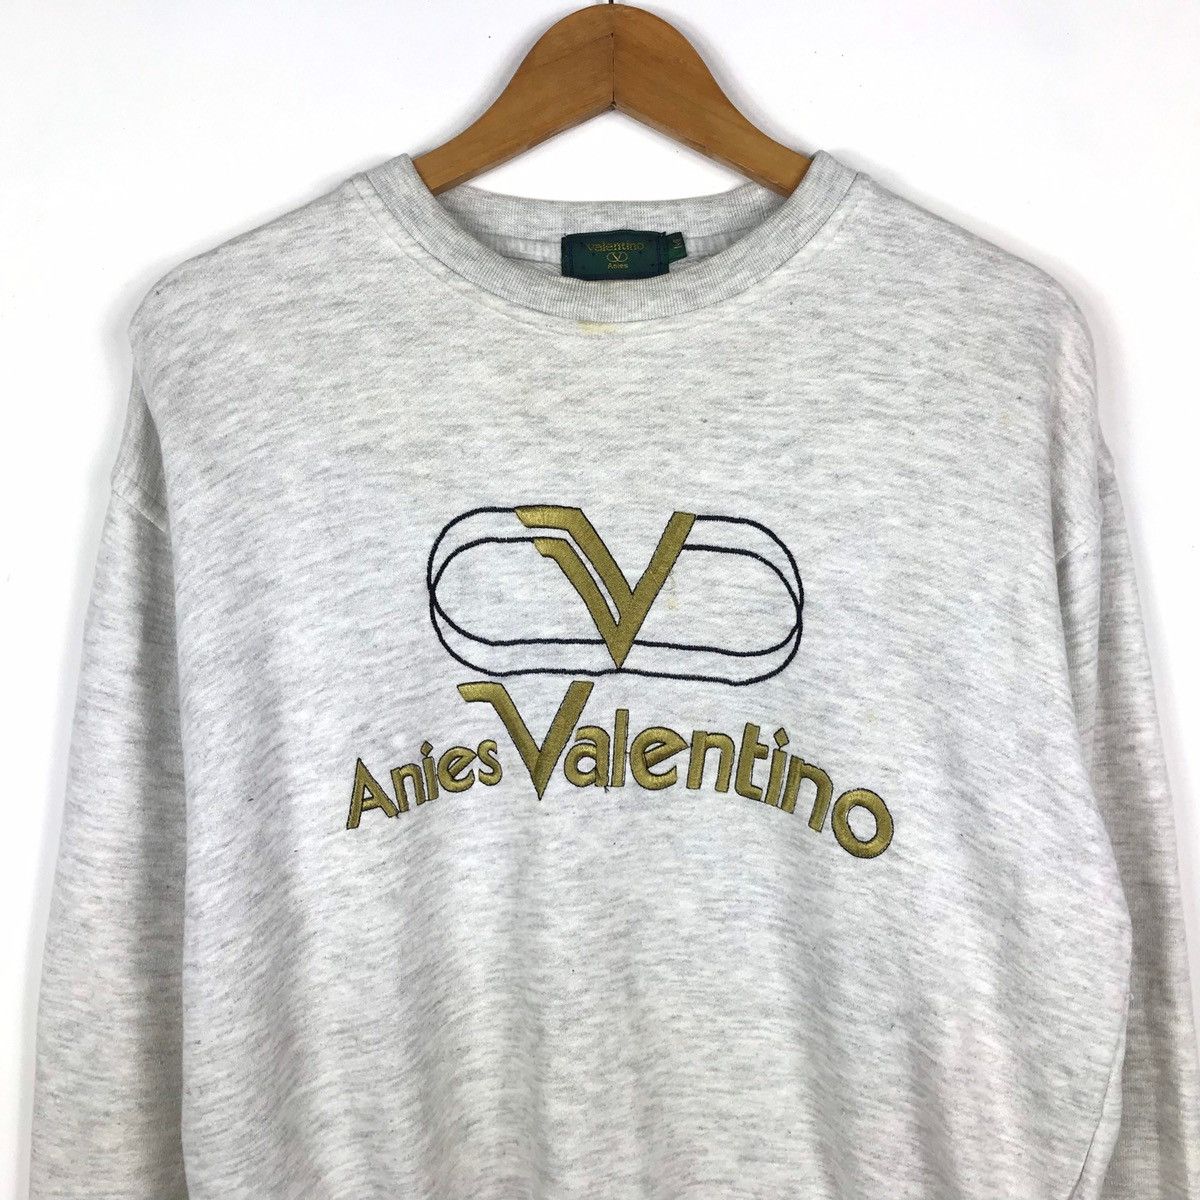 Vintage vintage anies valentino jumper pullover sweatshirt Size US M / EU 48-50 / 2 - 2 Preview